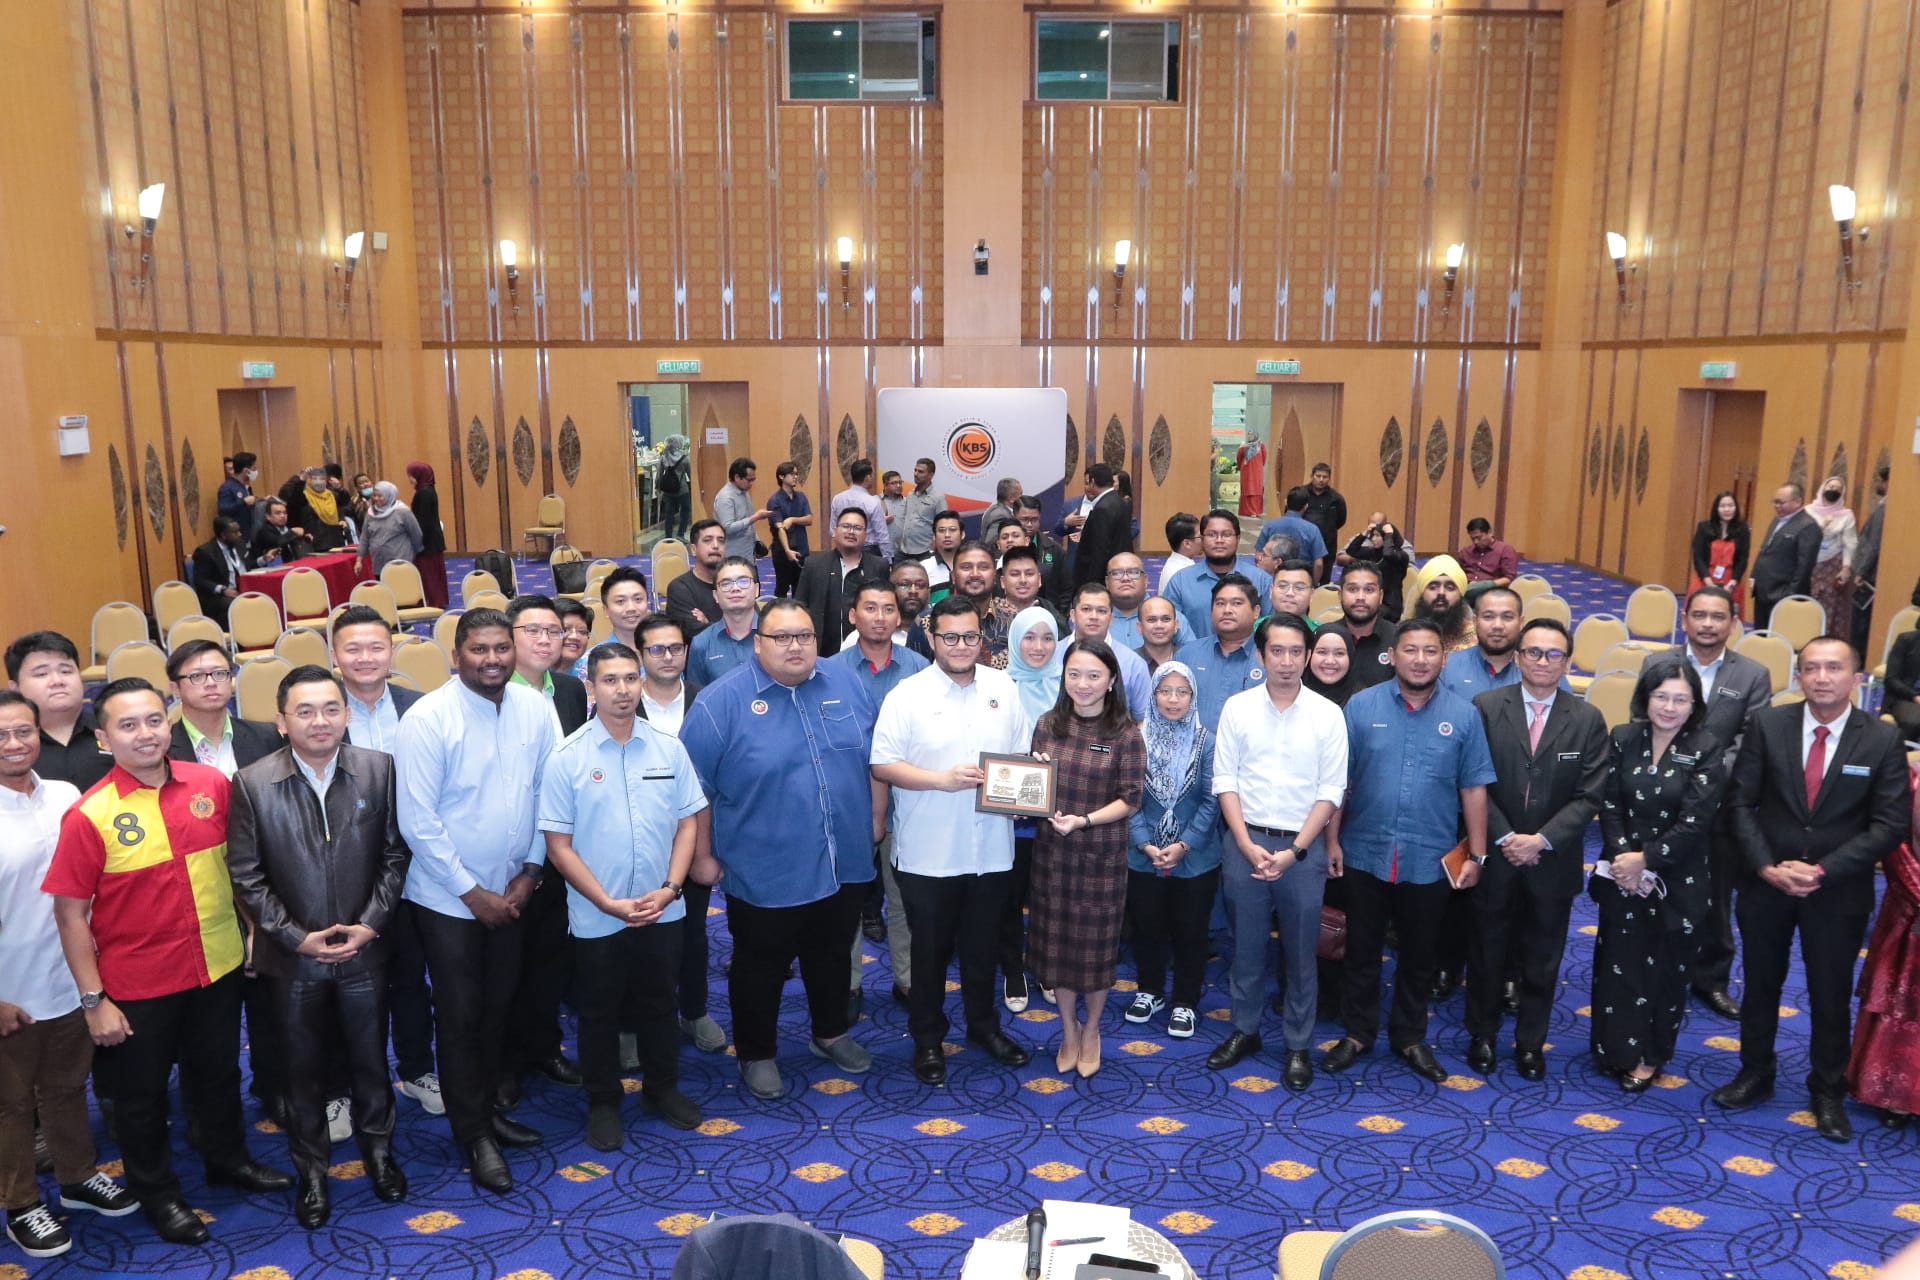 Town Hall YB Menteri Belia dan Sukan – MBM platform kongsi aspirasi belia Malaysia